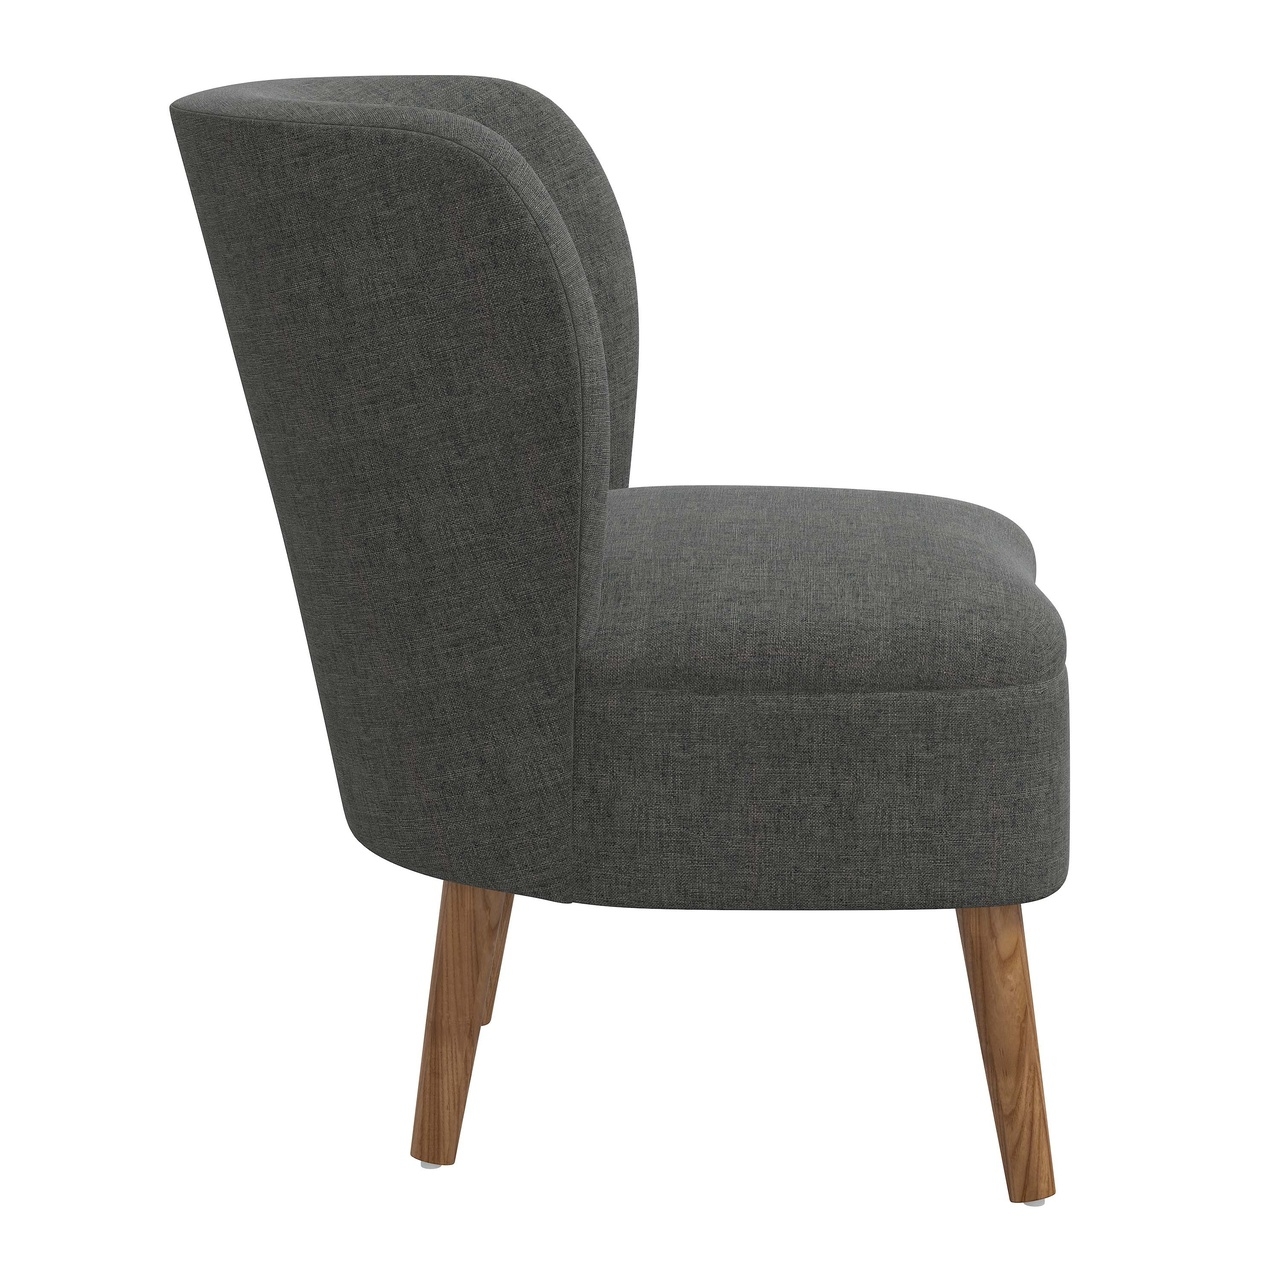 Lara Chair - Image 2